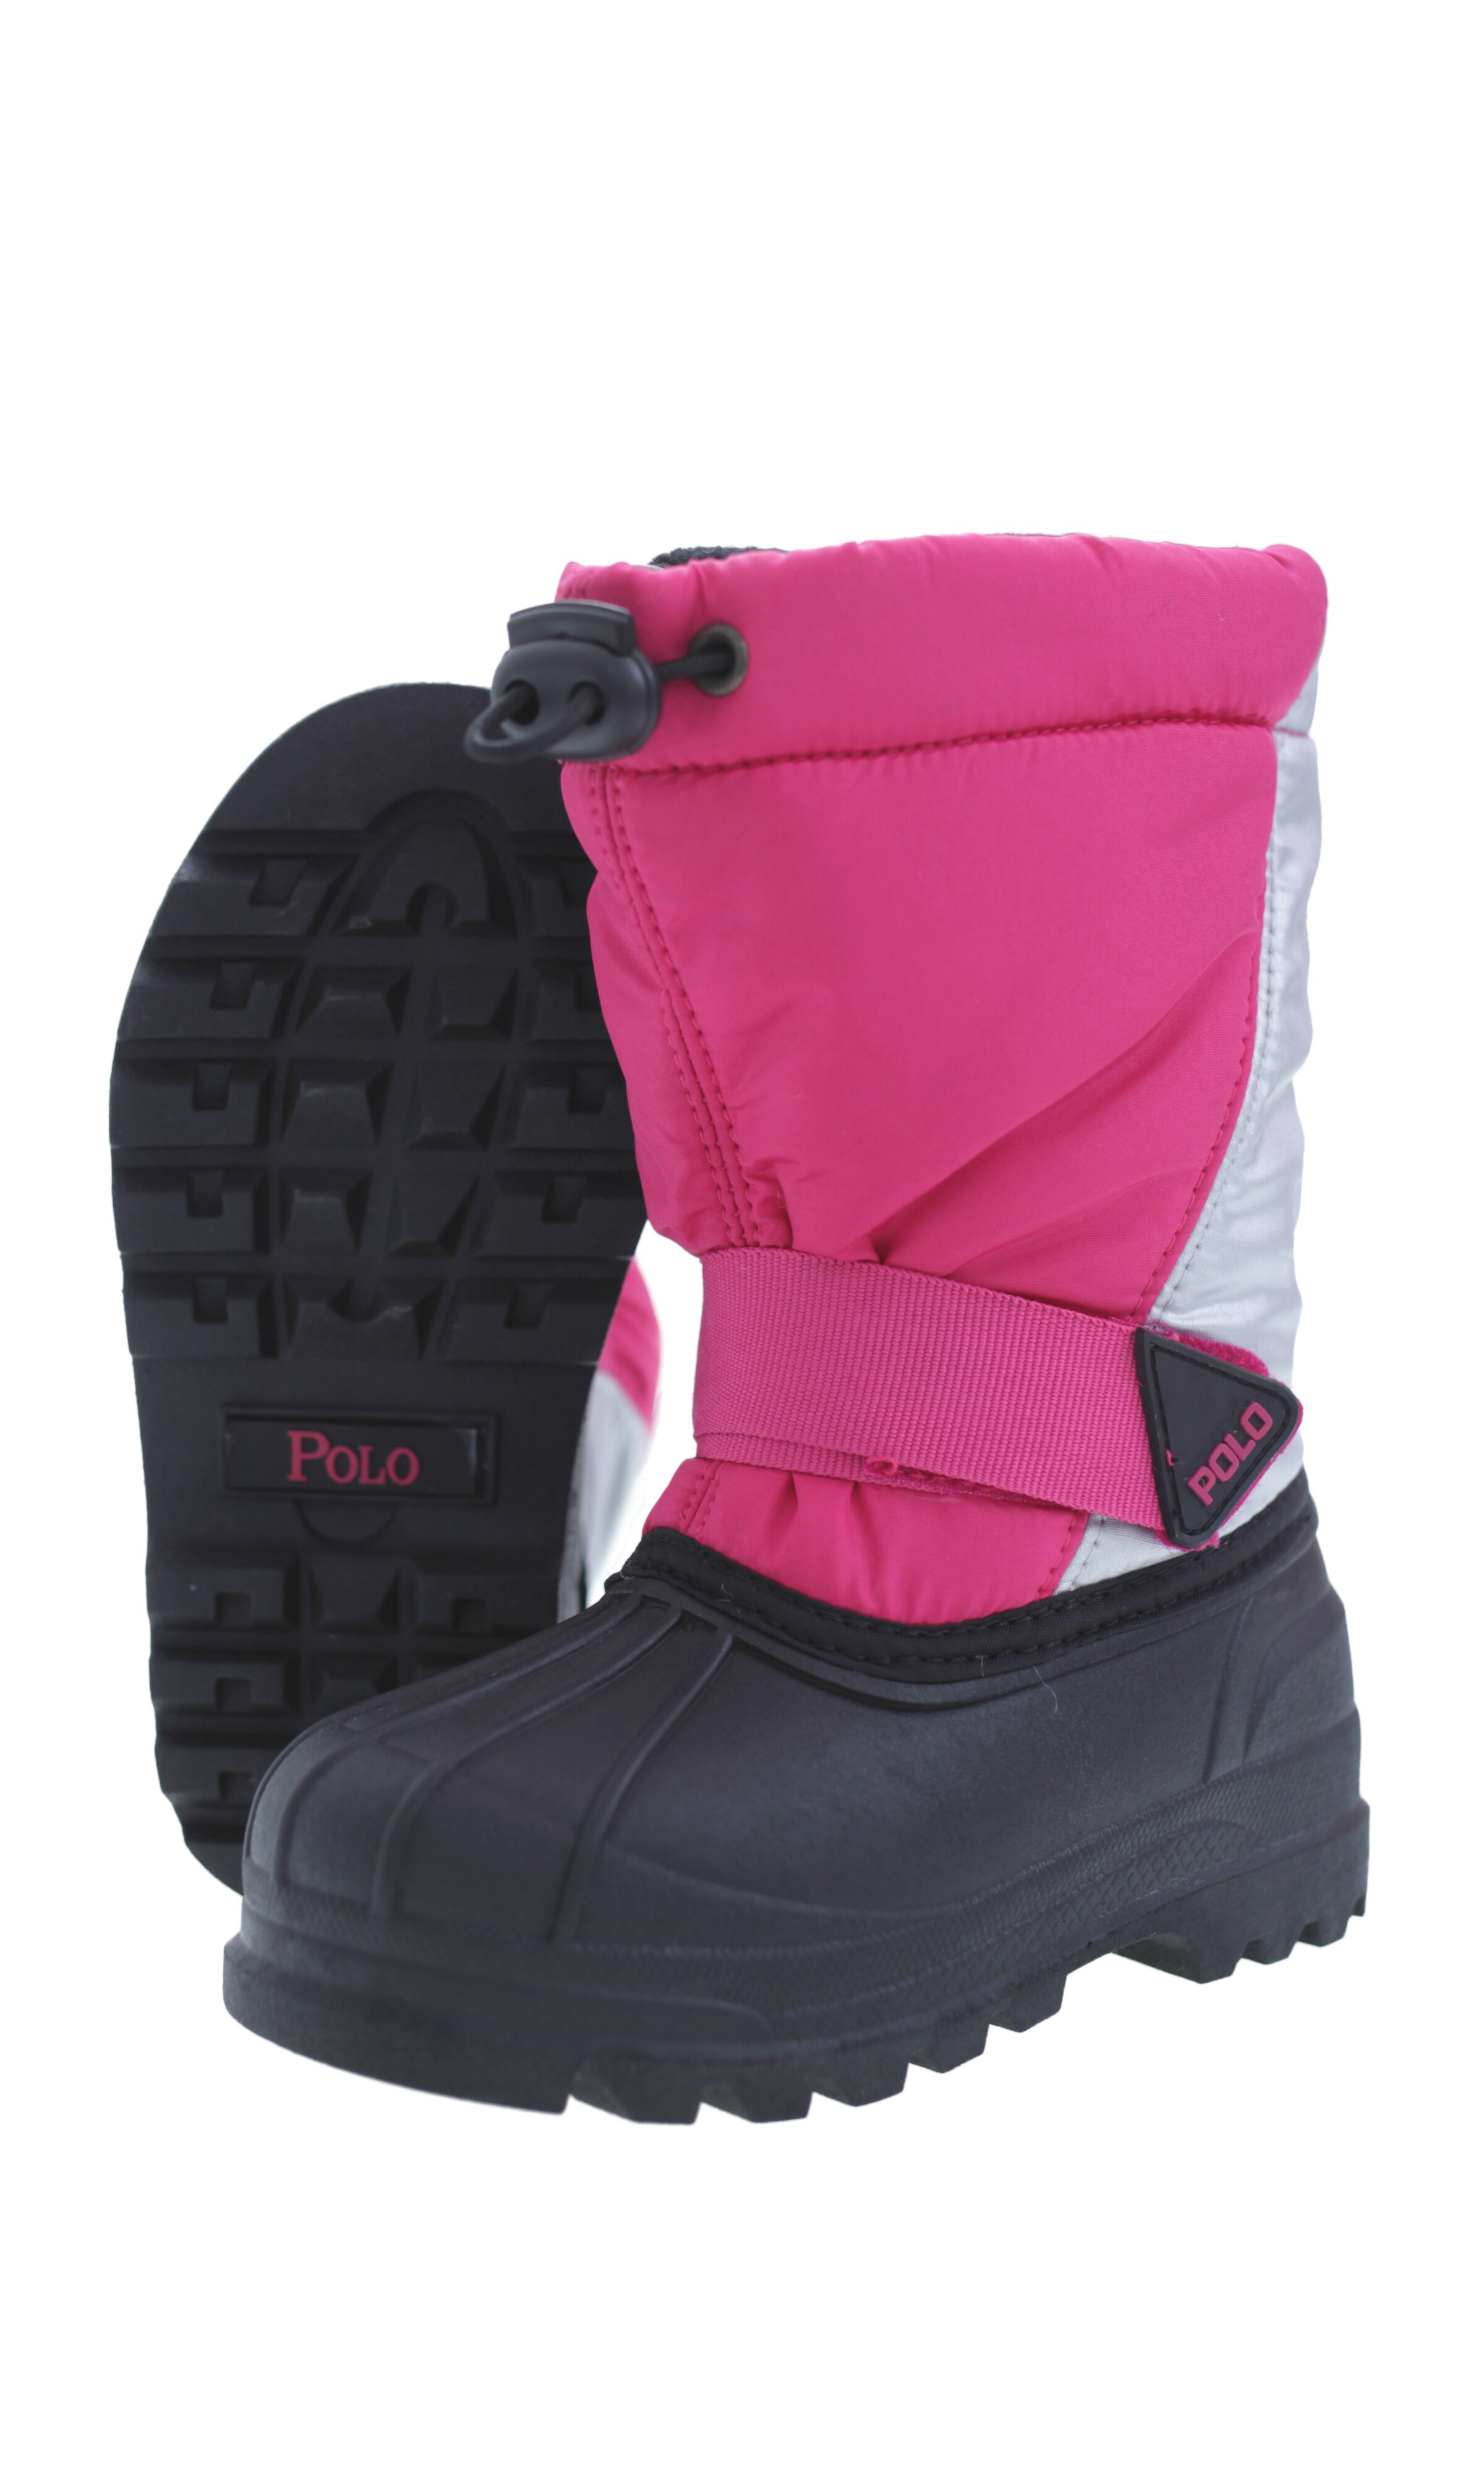 polo ralph lauren snow boots